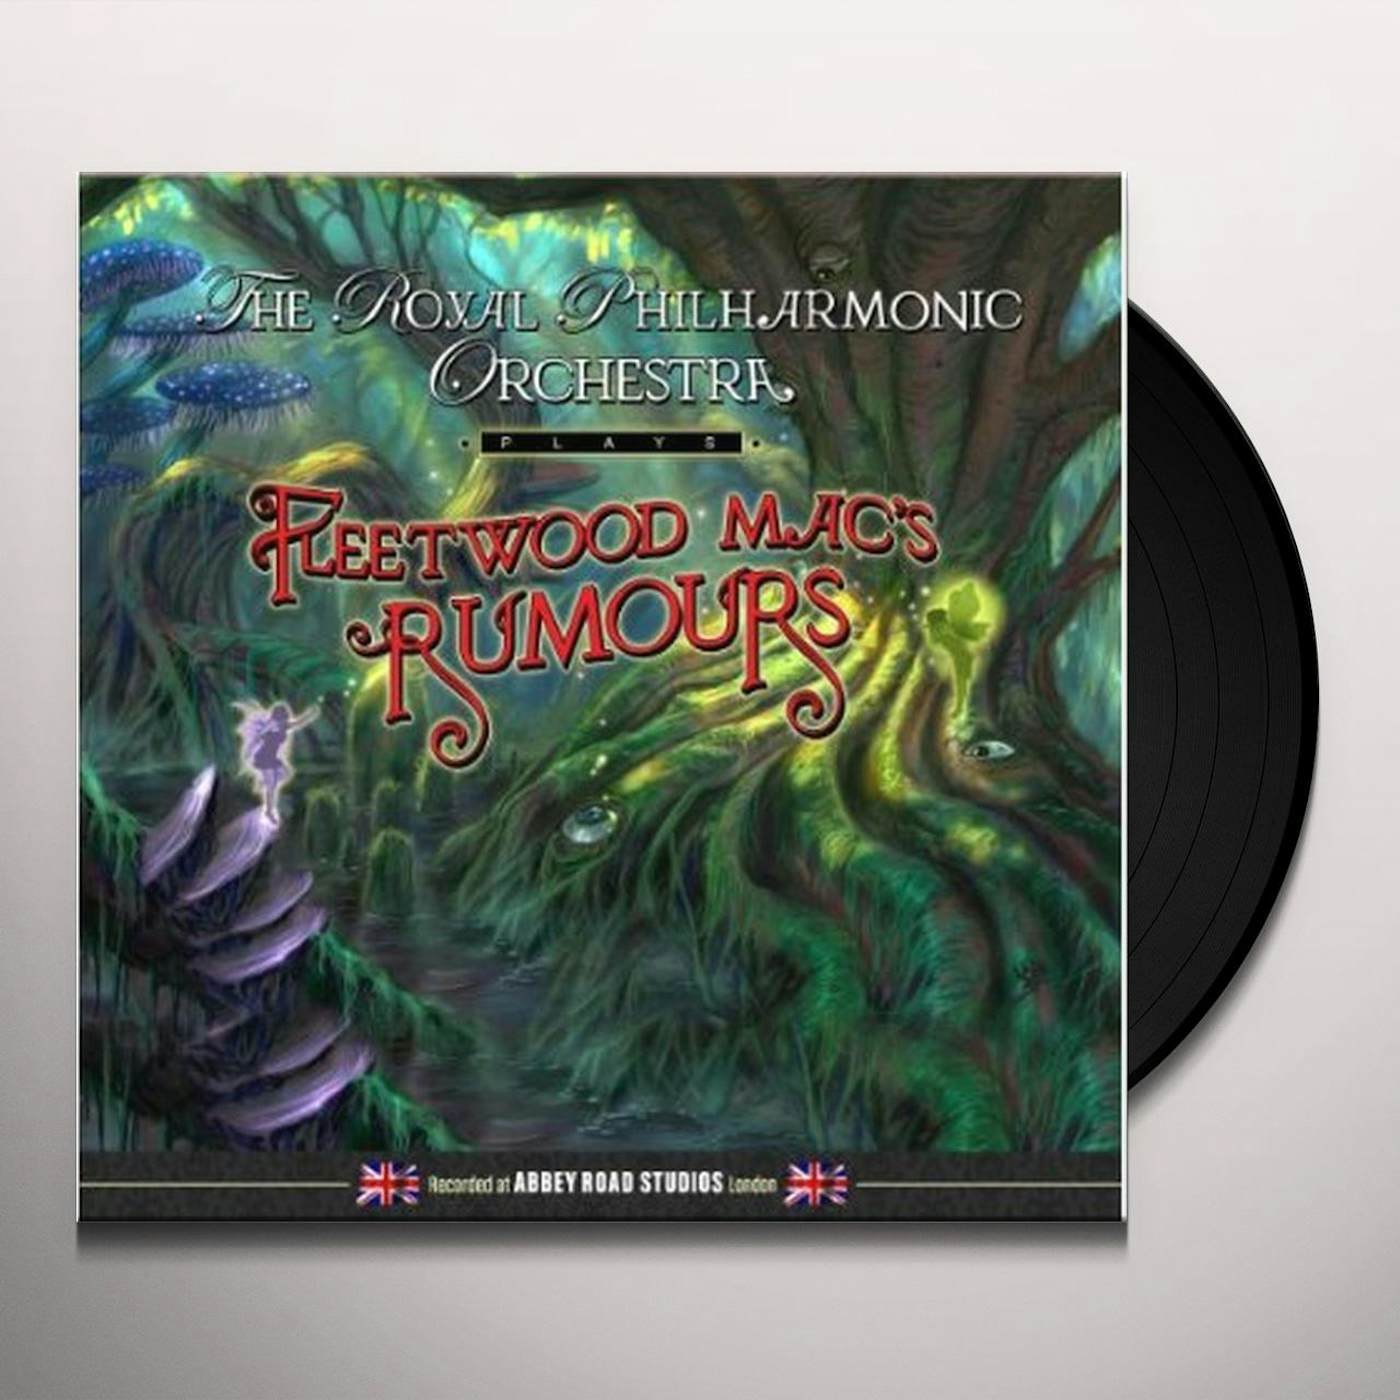 Royal Philharmonic Orchestra Plays Fleetwood Mac's Rumours Vinyl Record